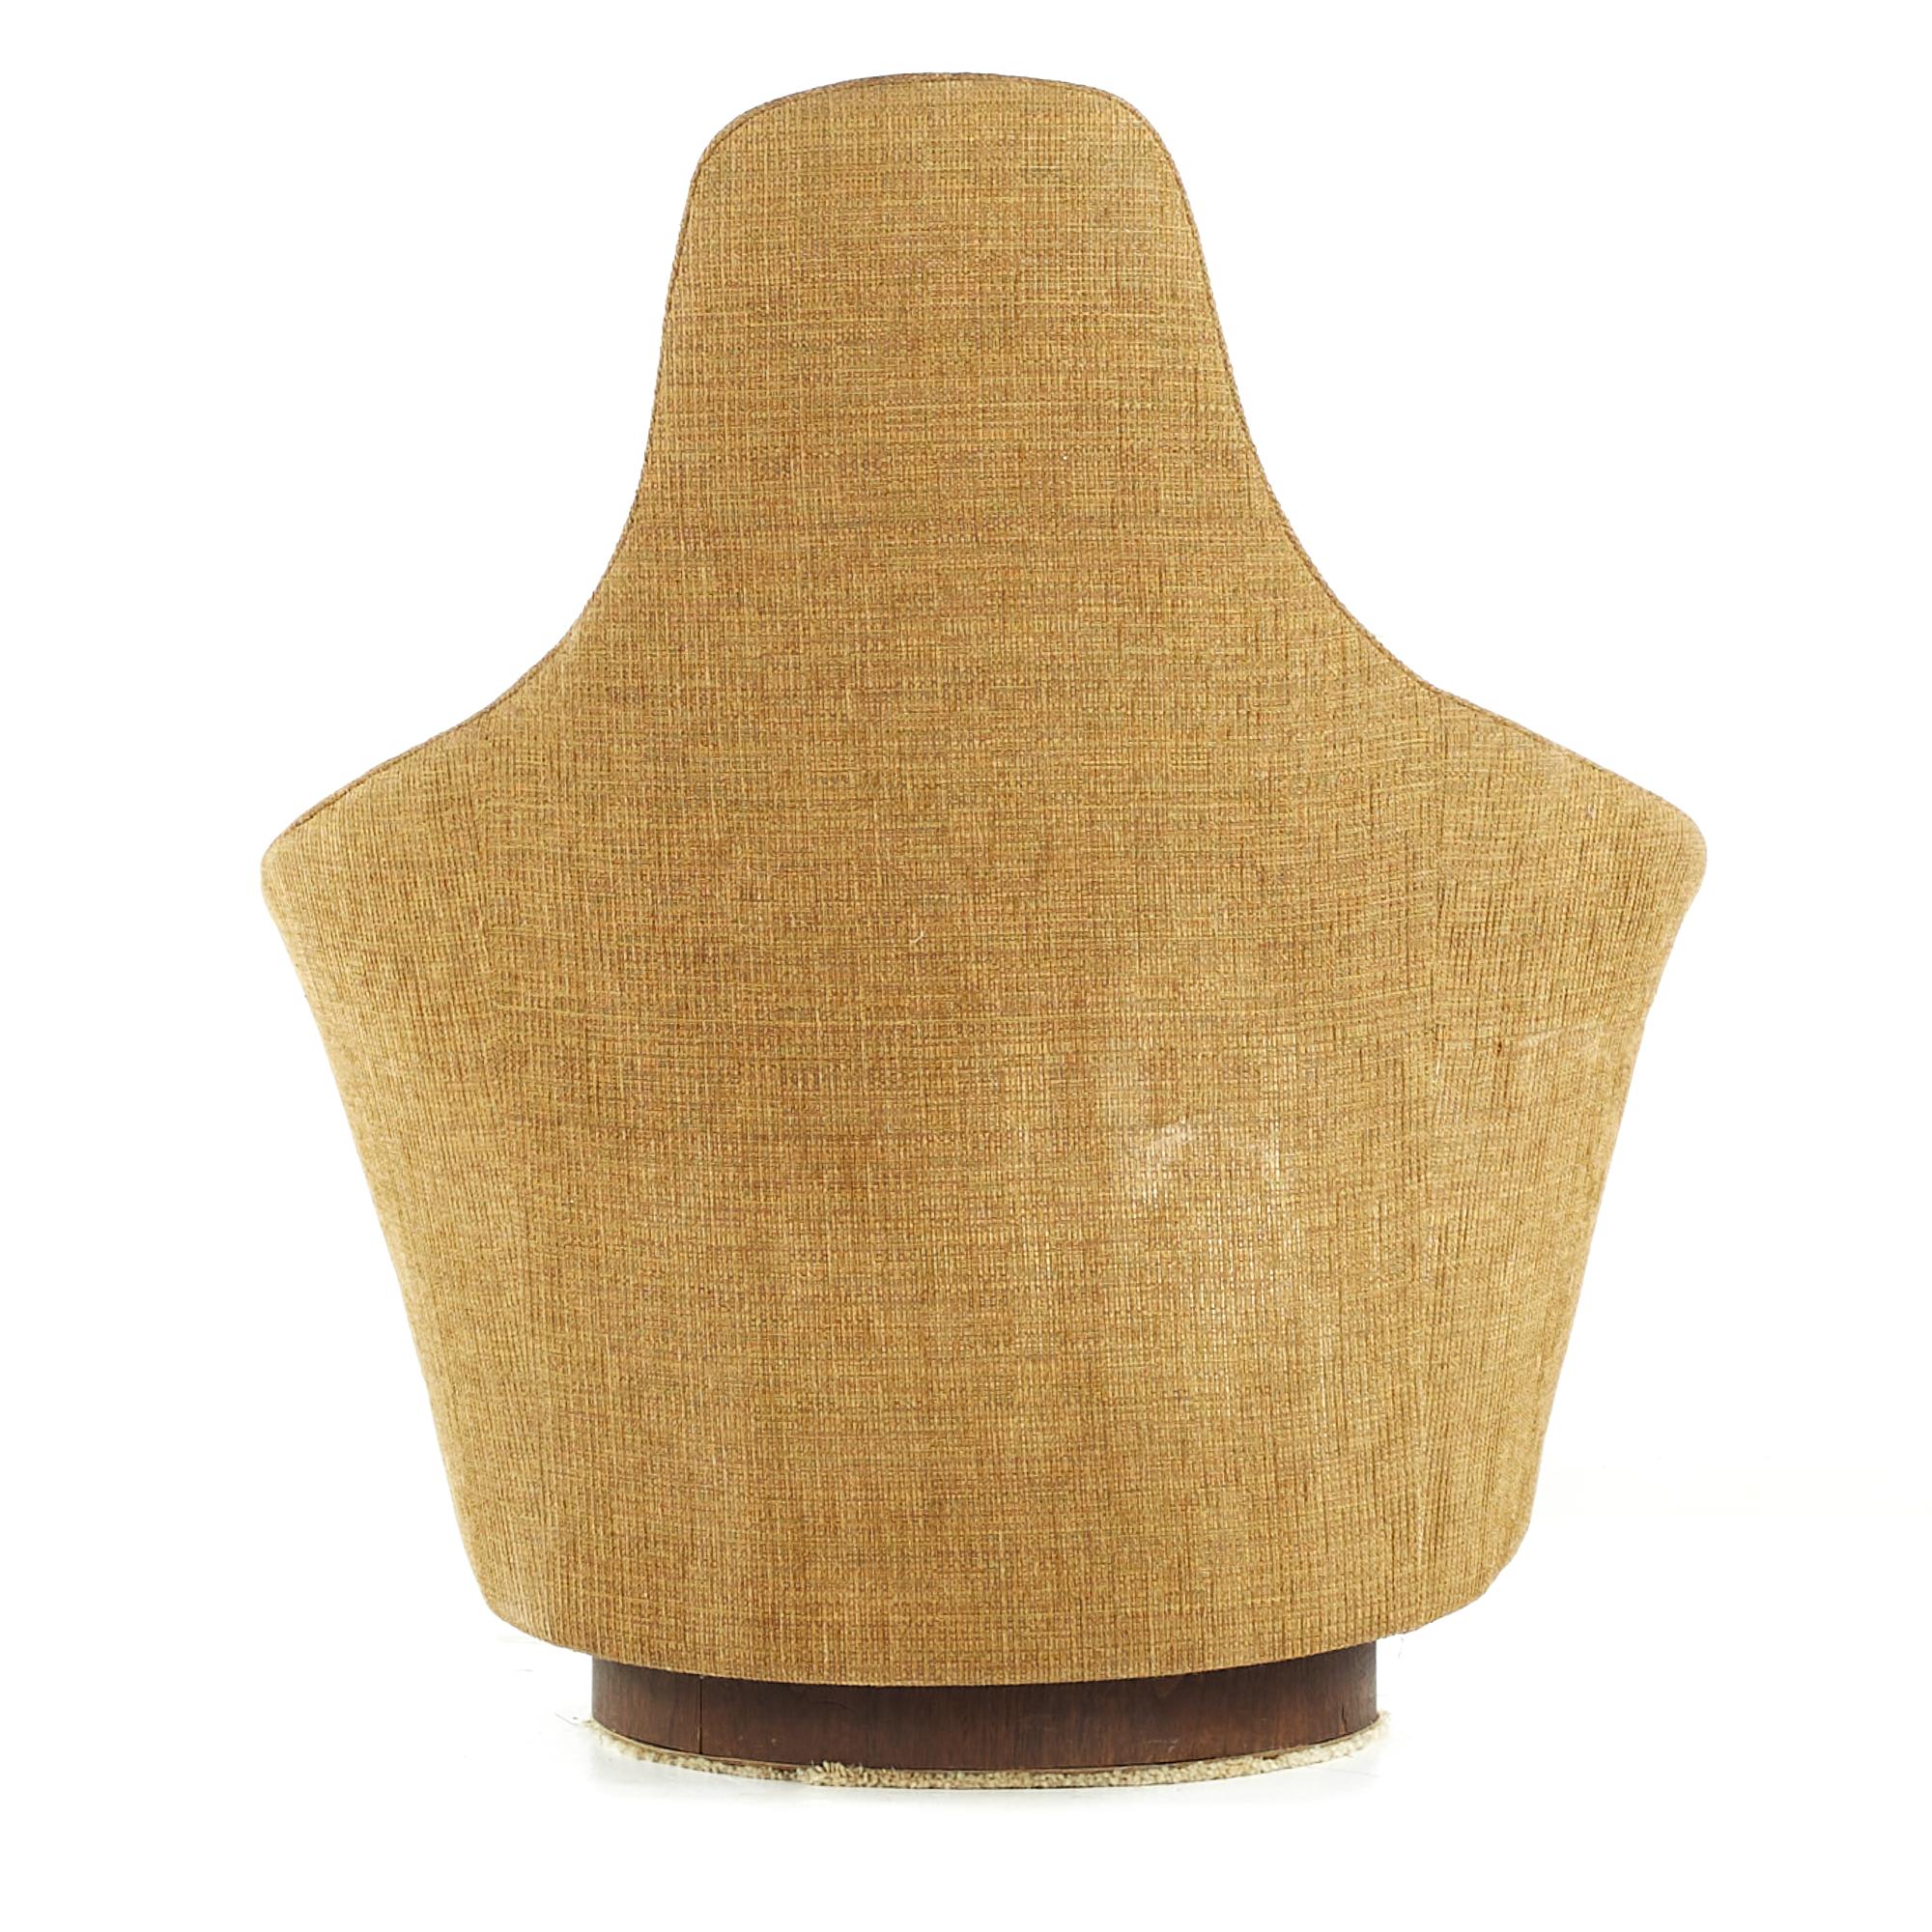 Upholstery Adrian Pearsall for Craft Associates Midcentury Swivel Tilt Chair For Sale